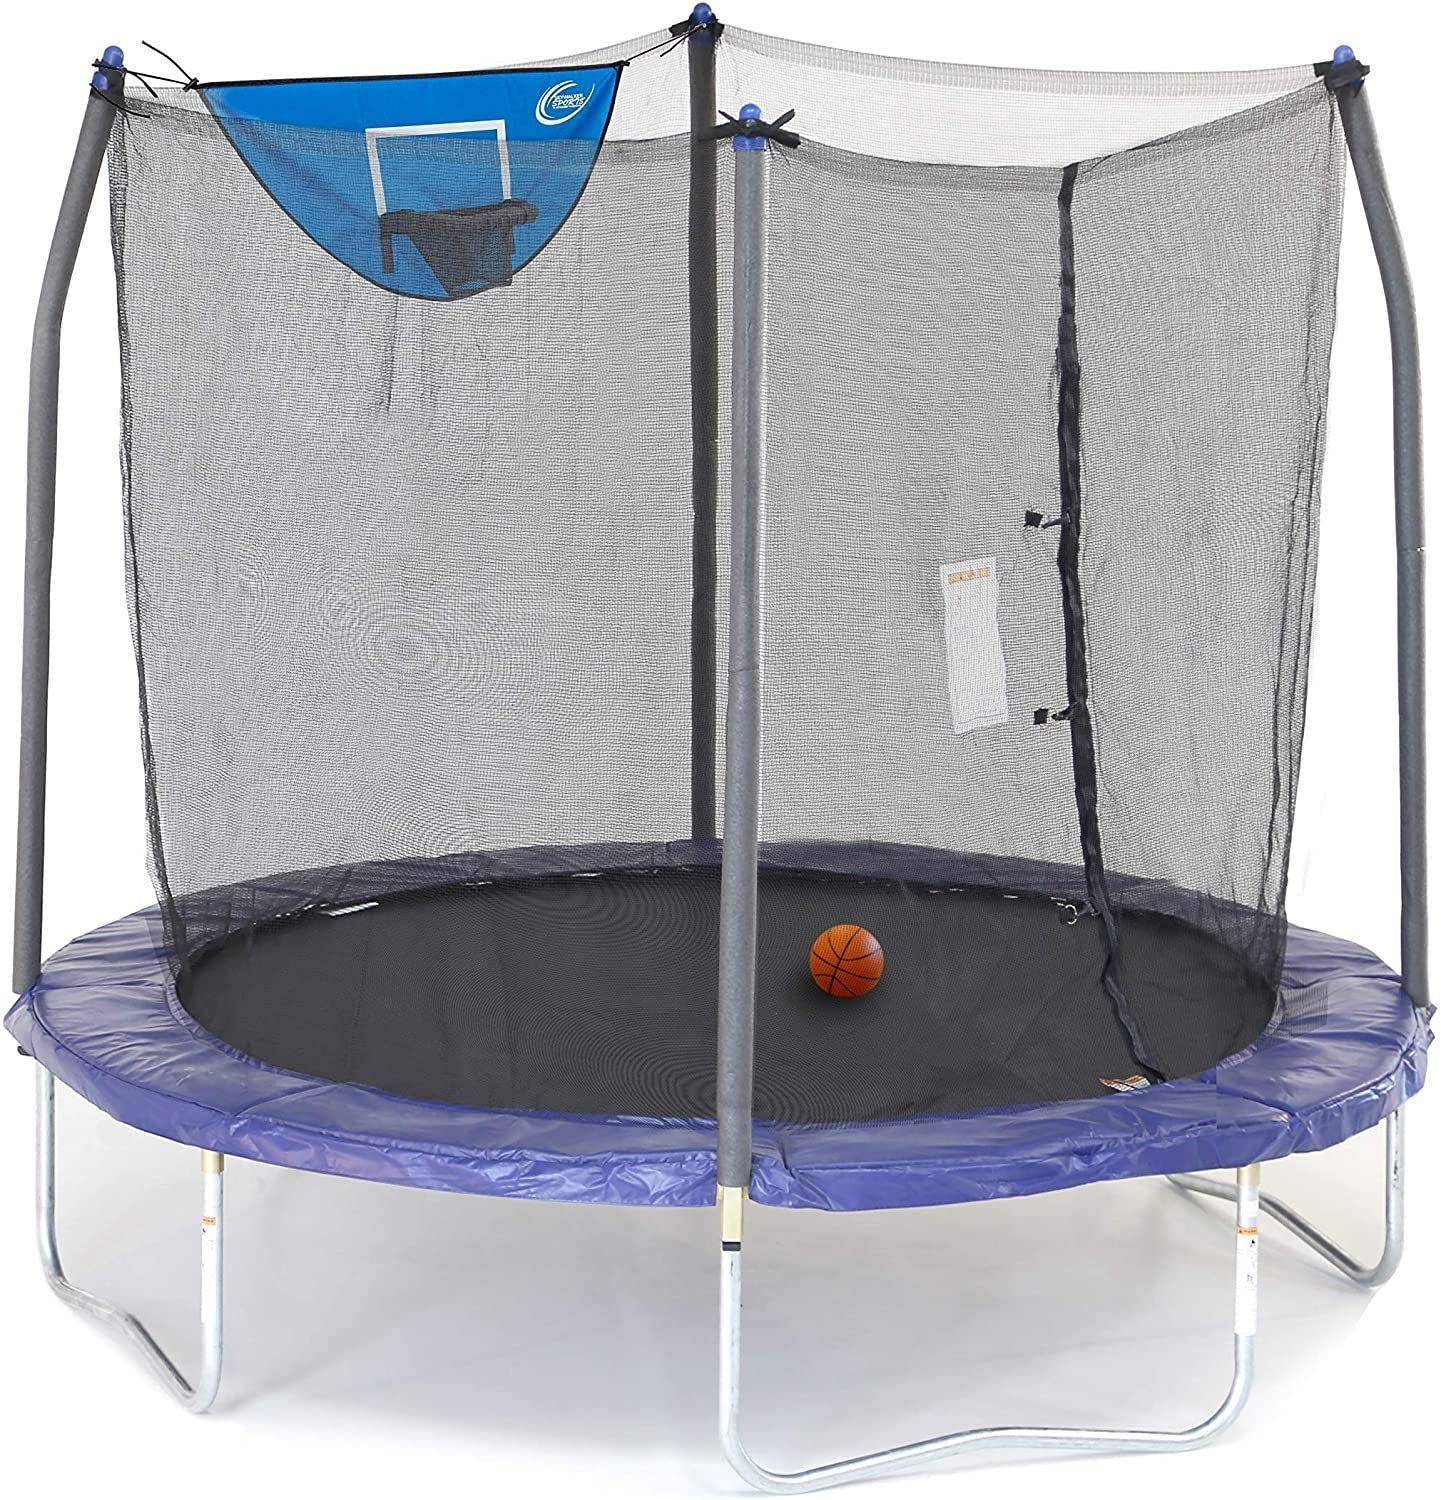 Skywalker Basketball Trampolines 8-Foot Jump N’ Dunk Trampoline with Enclosure Net